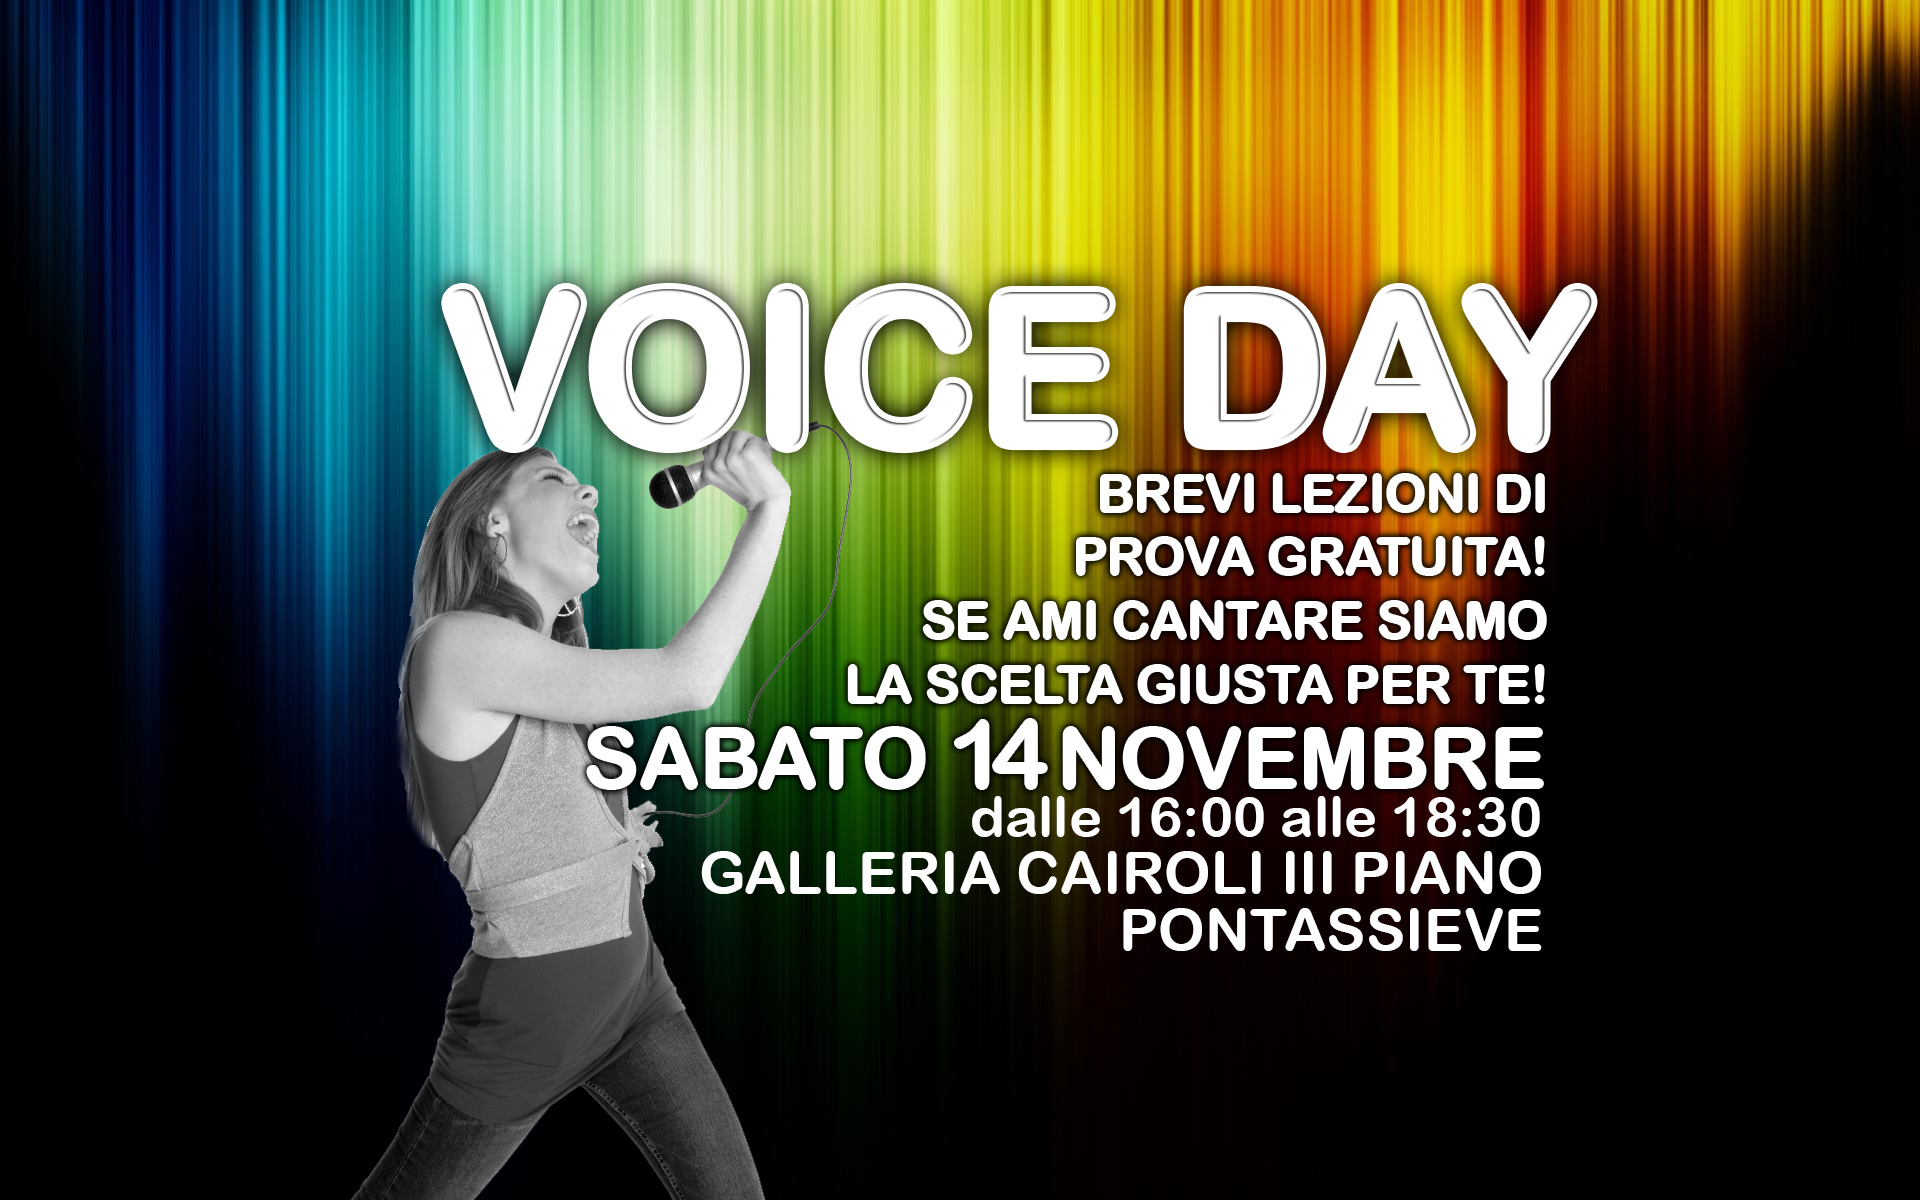 Voice Day Pontassieve 14 Novembre dalle 16 alle 18:30